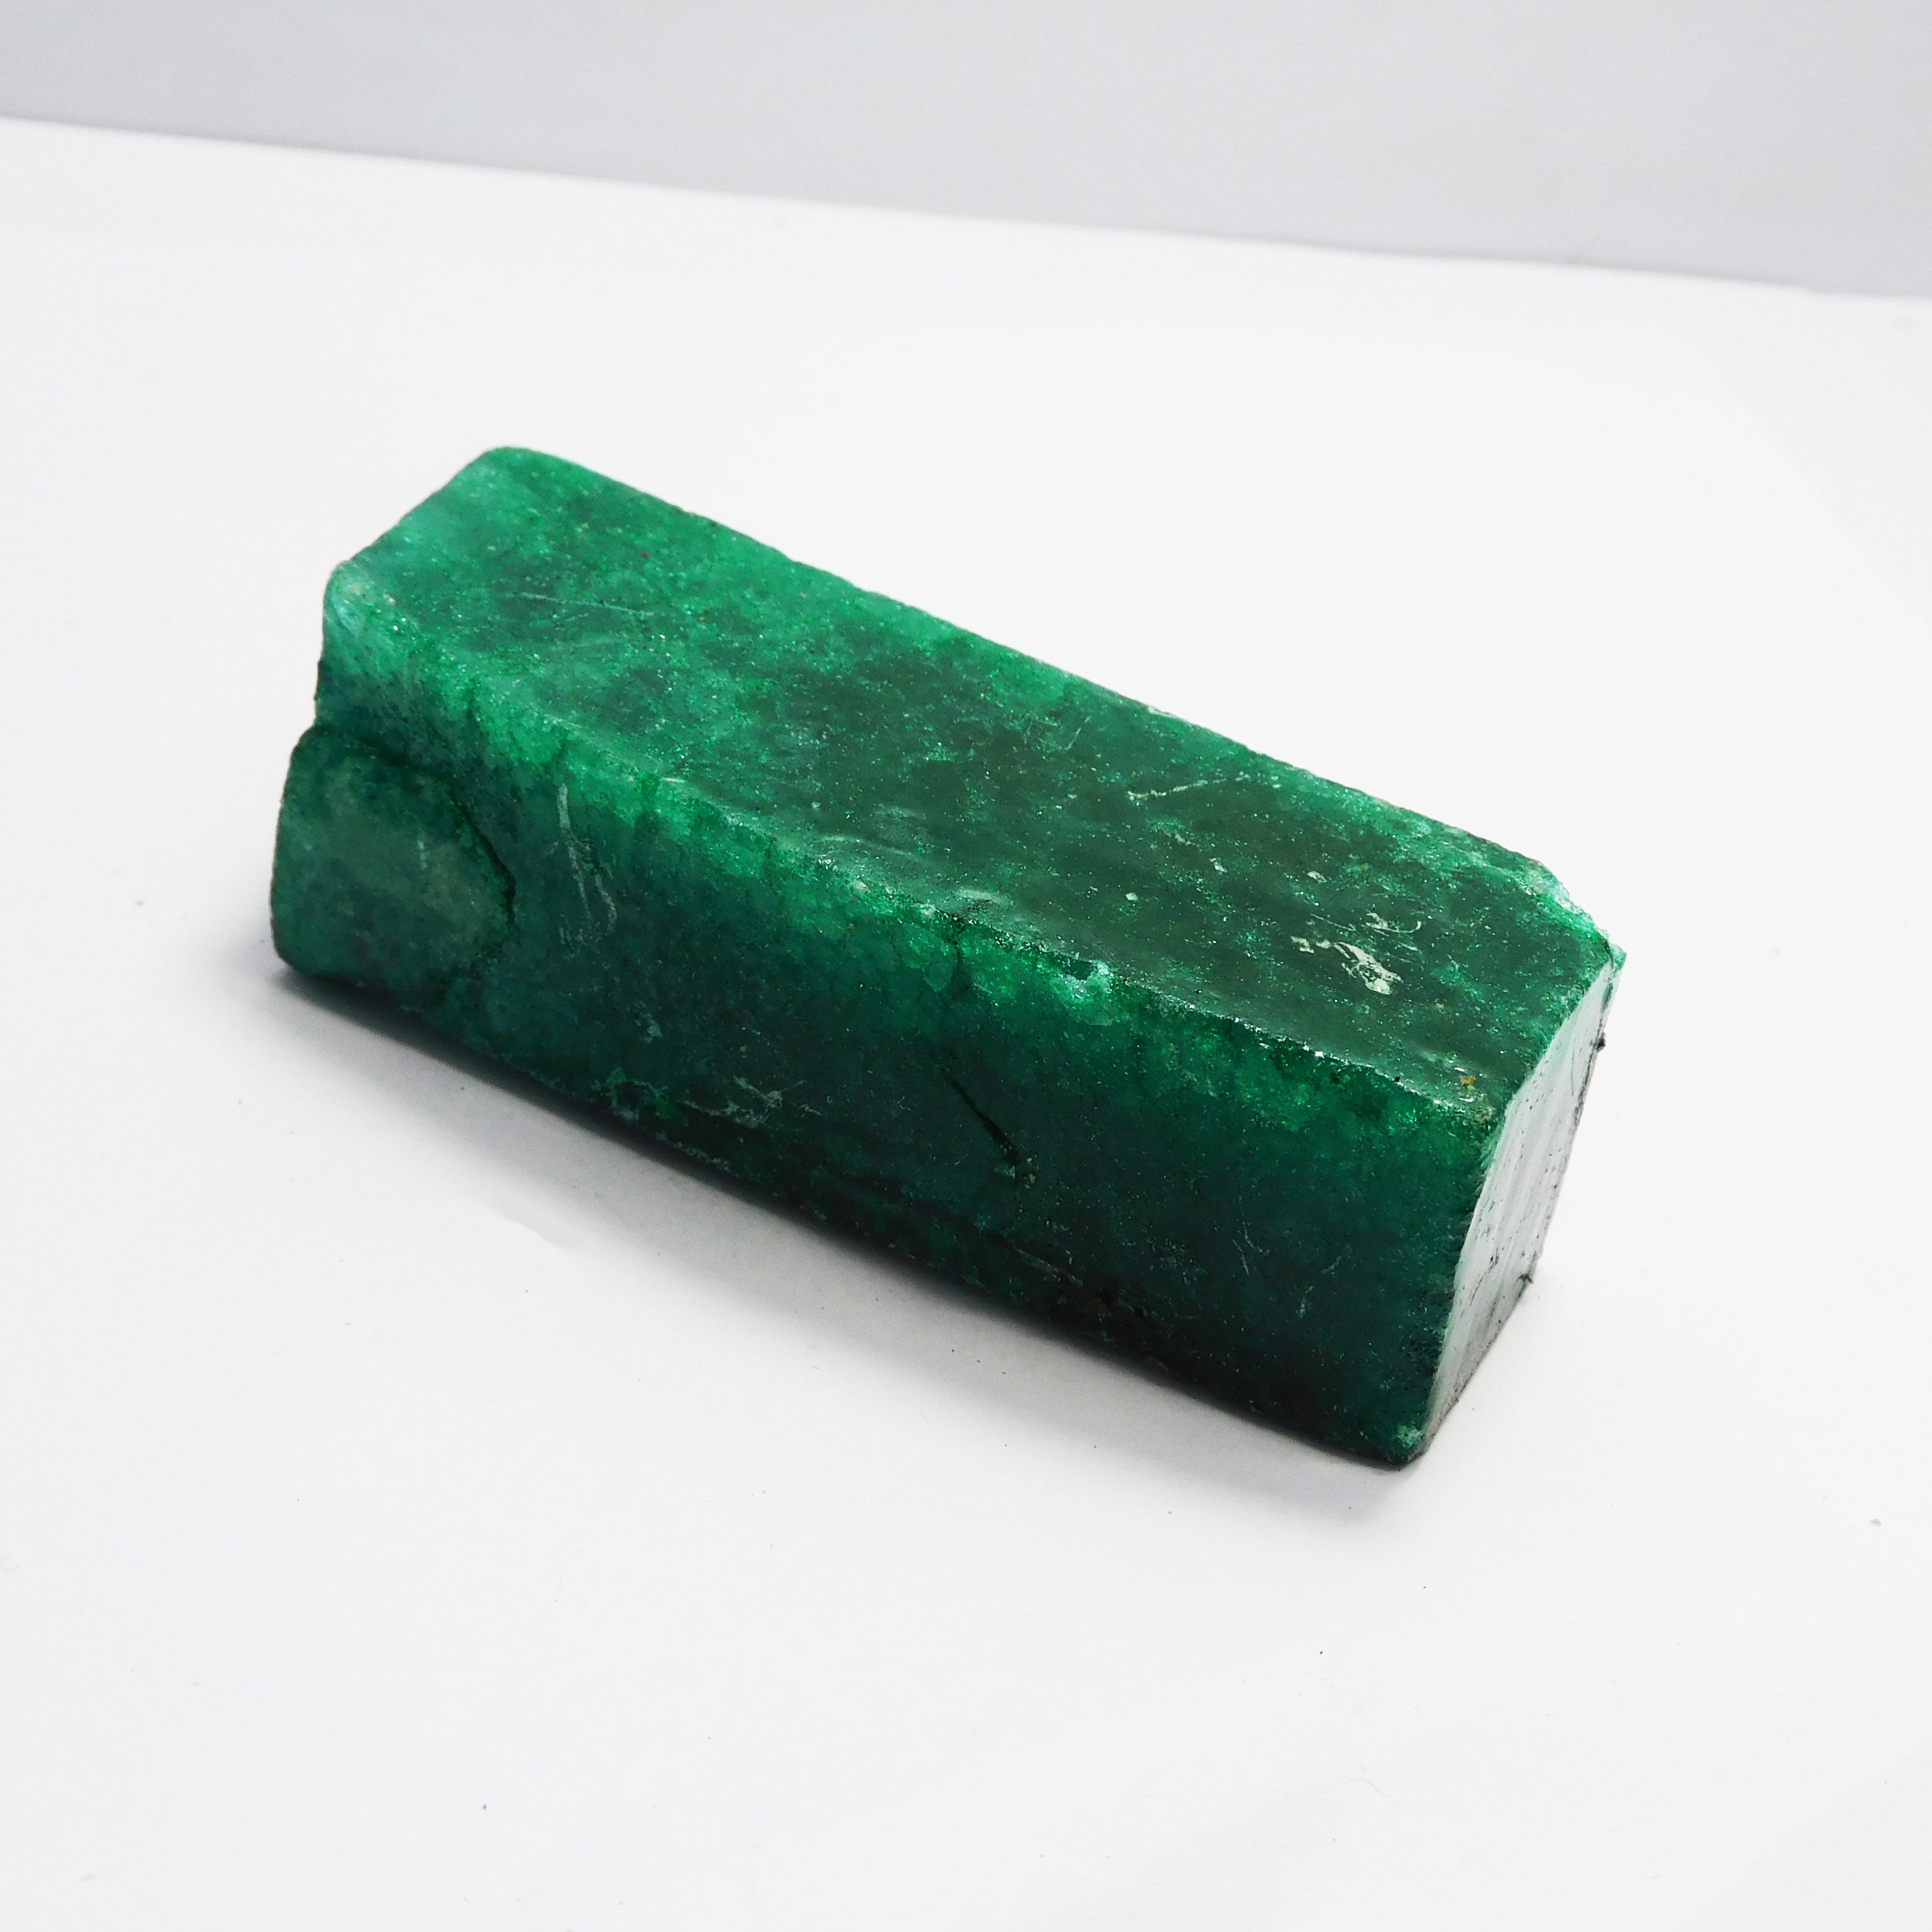 CERTIFIED Raw Uncut Rough 621.65 Carat Natural Green Emerald Rough Loose Gemstone